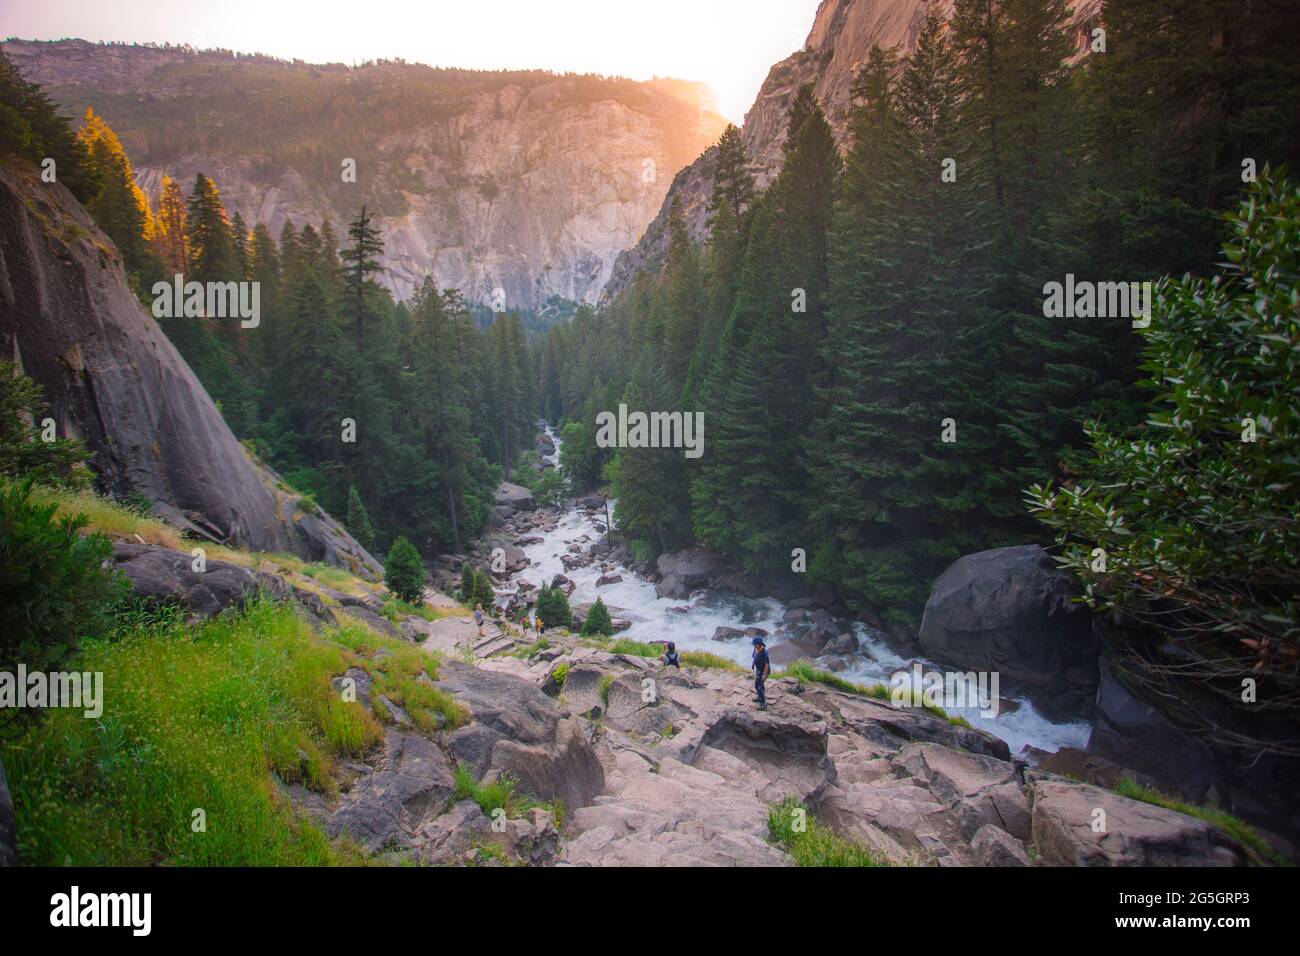 Yosemite National Parks - Vernal Fall Trails während Sonnenuntergang. Goldgelbes Licht des Yosemite Bergtals bei Sonnenuntergang. Stockfoto